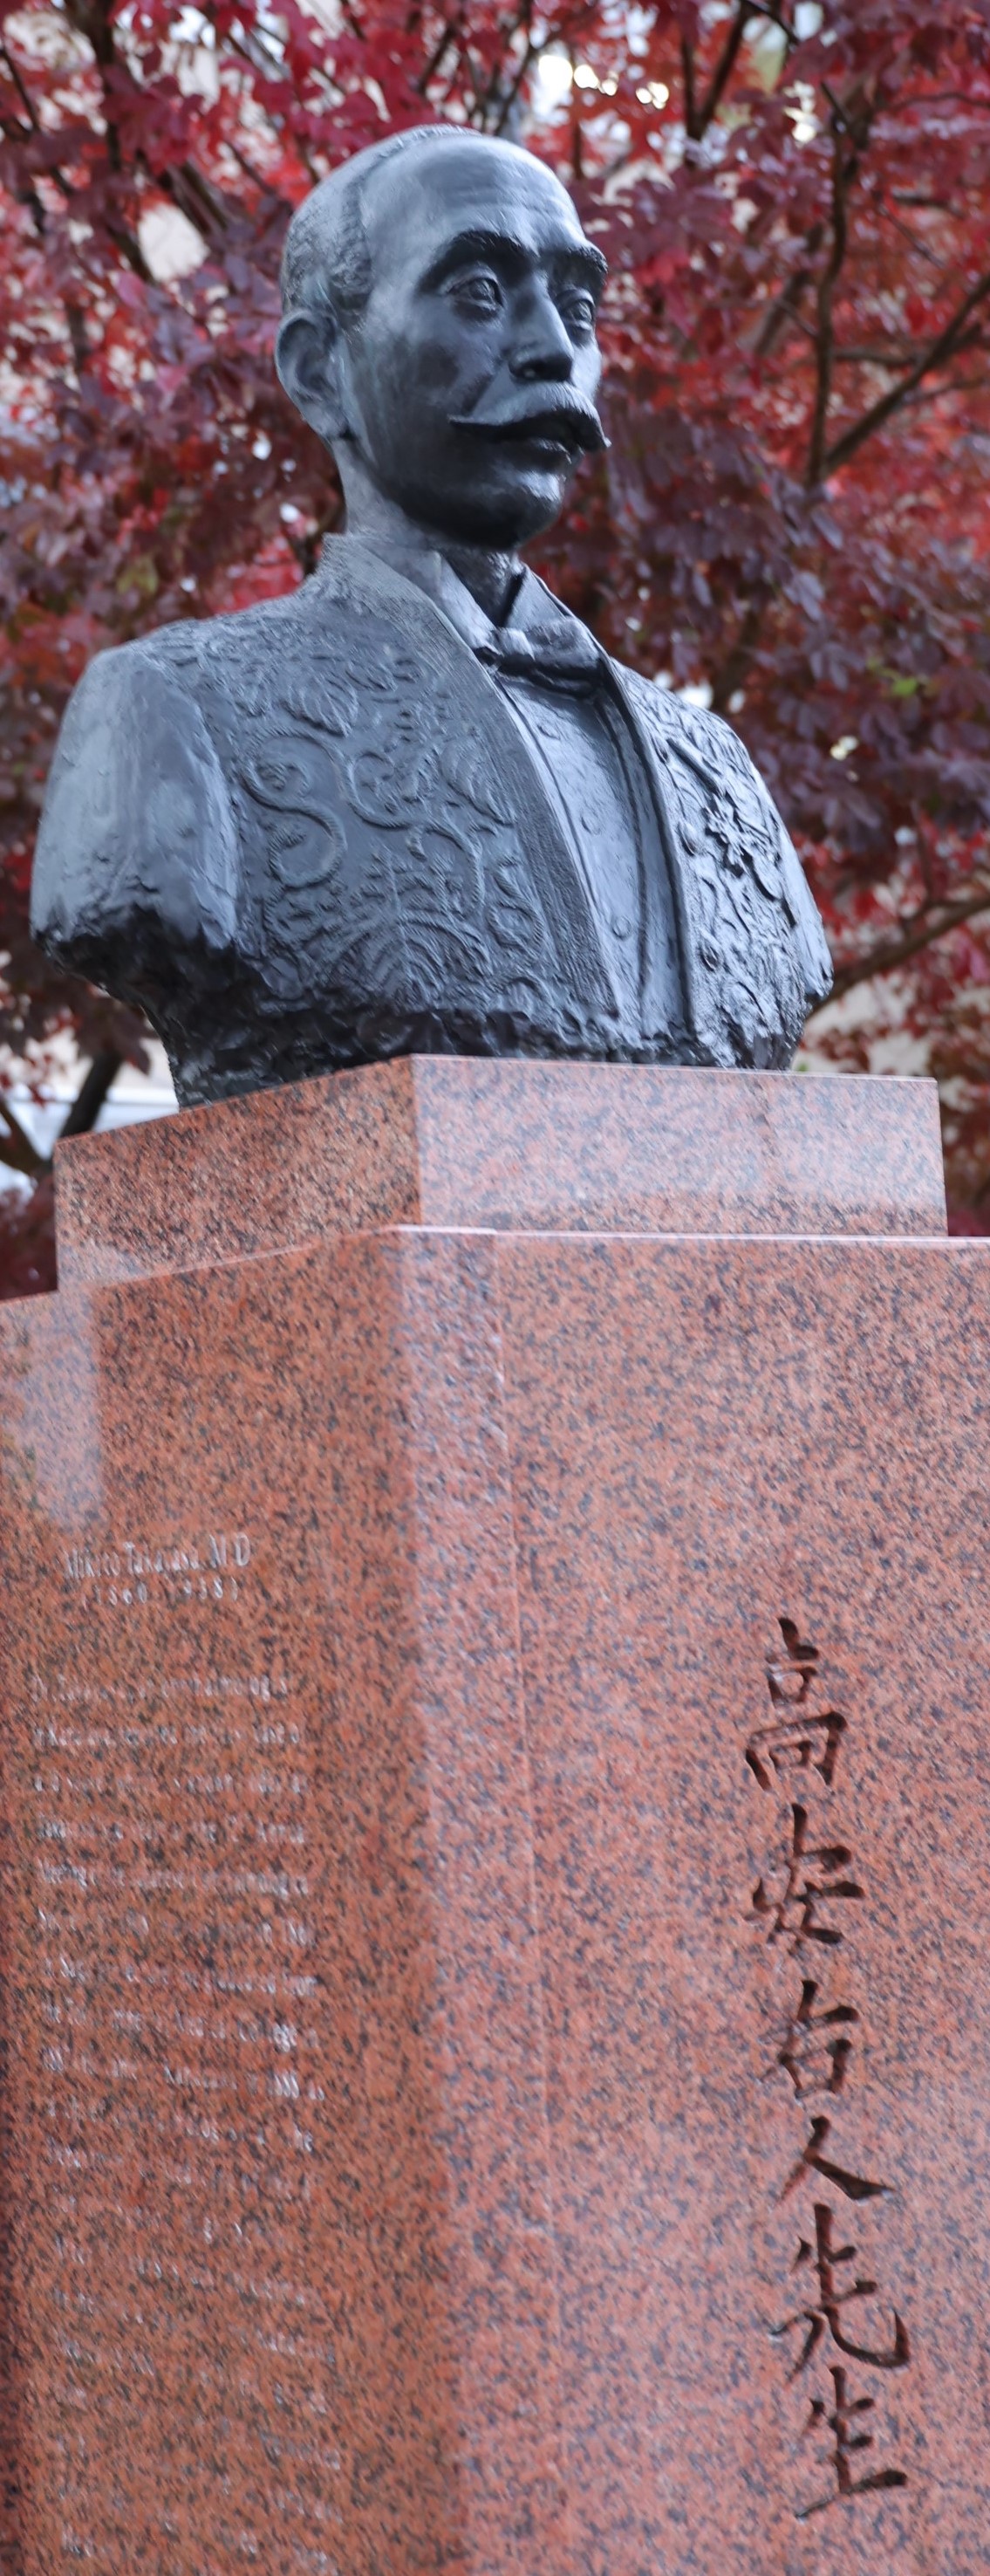 旧金沢医科大学の初代学長、高安右人教授の銅像